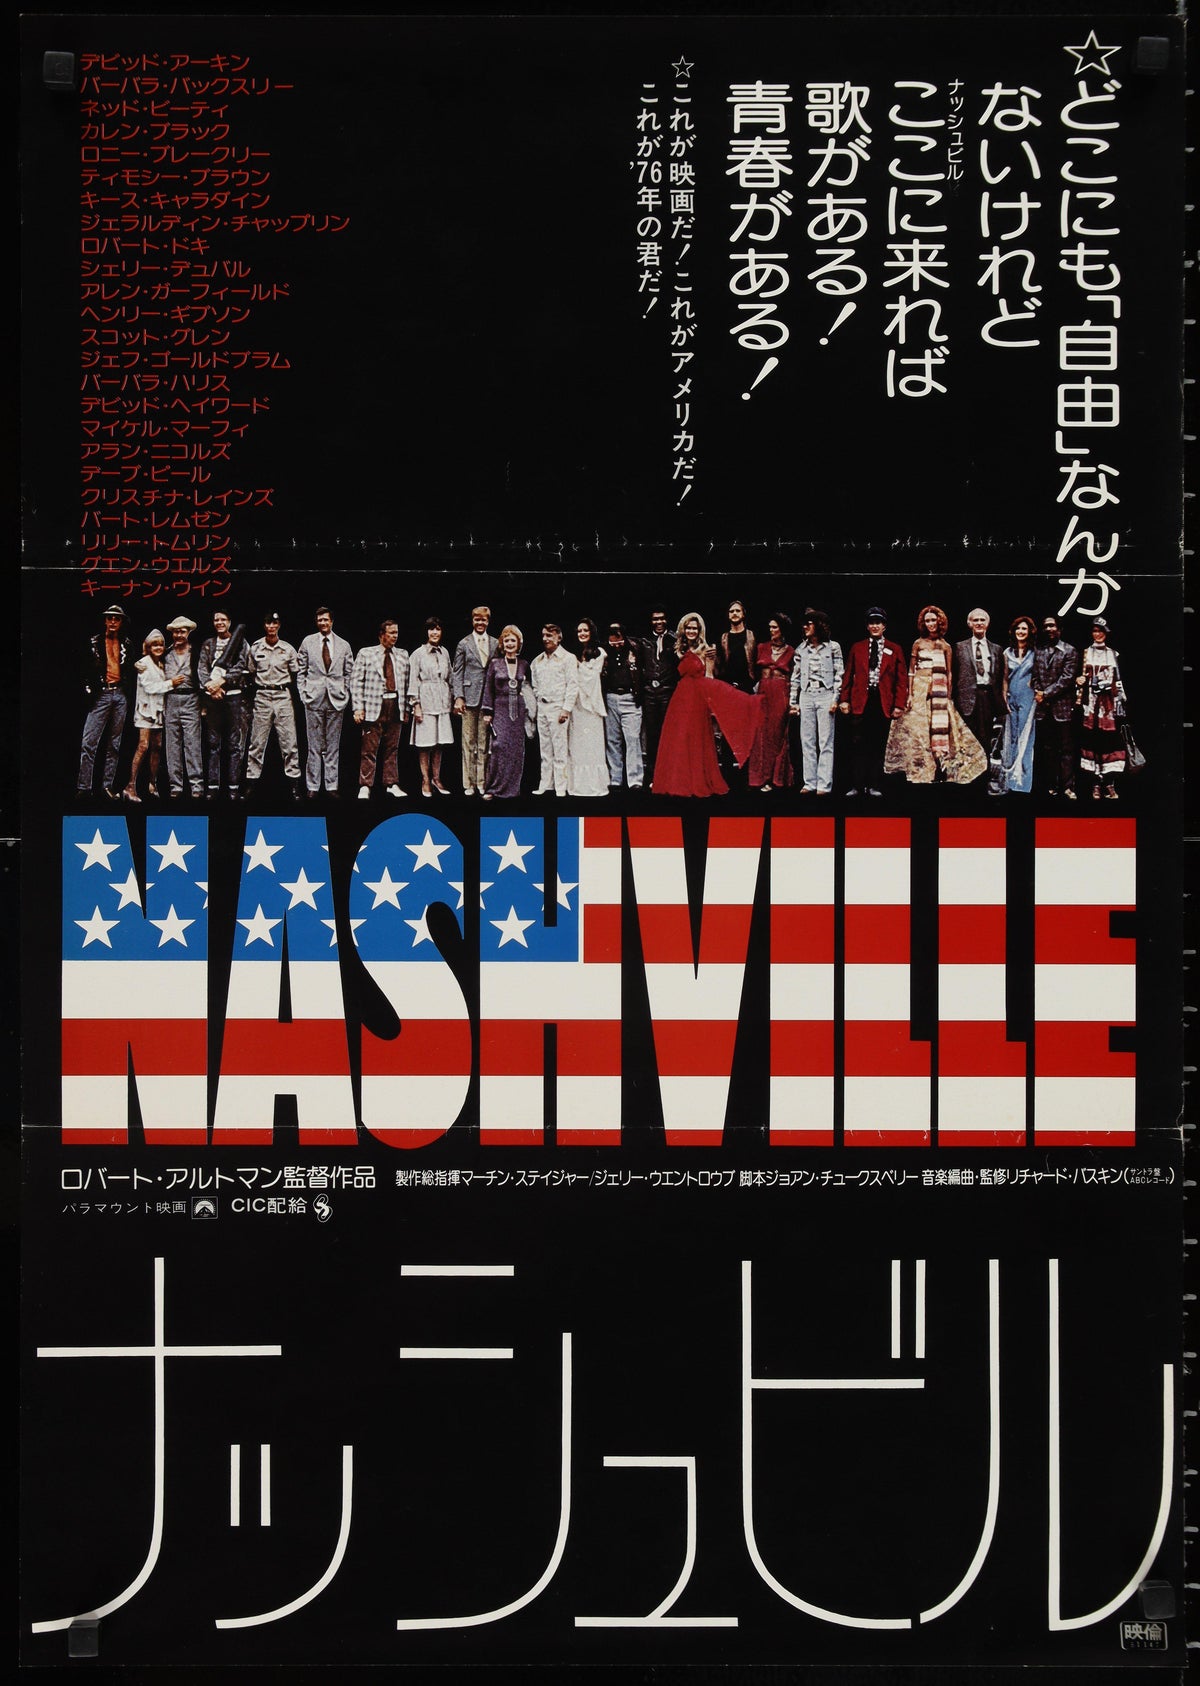 Nashville Japanese 1 panel (20x29) Original Vintage Movie Poster